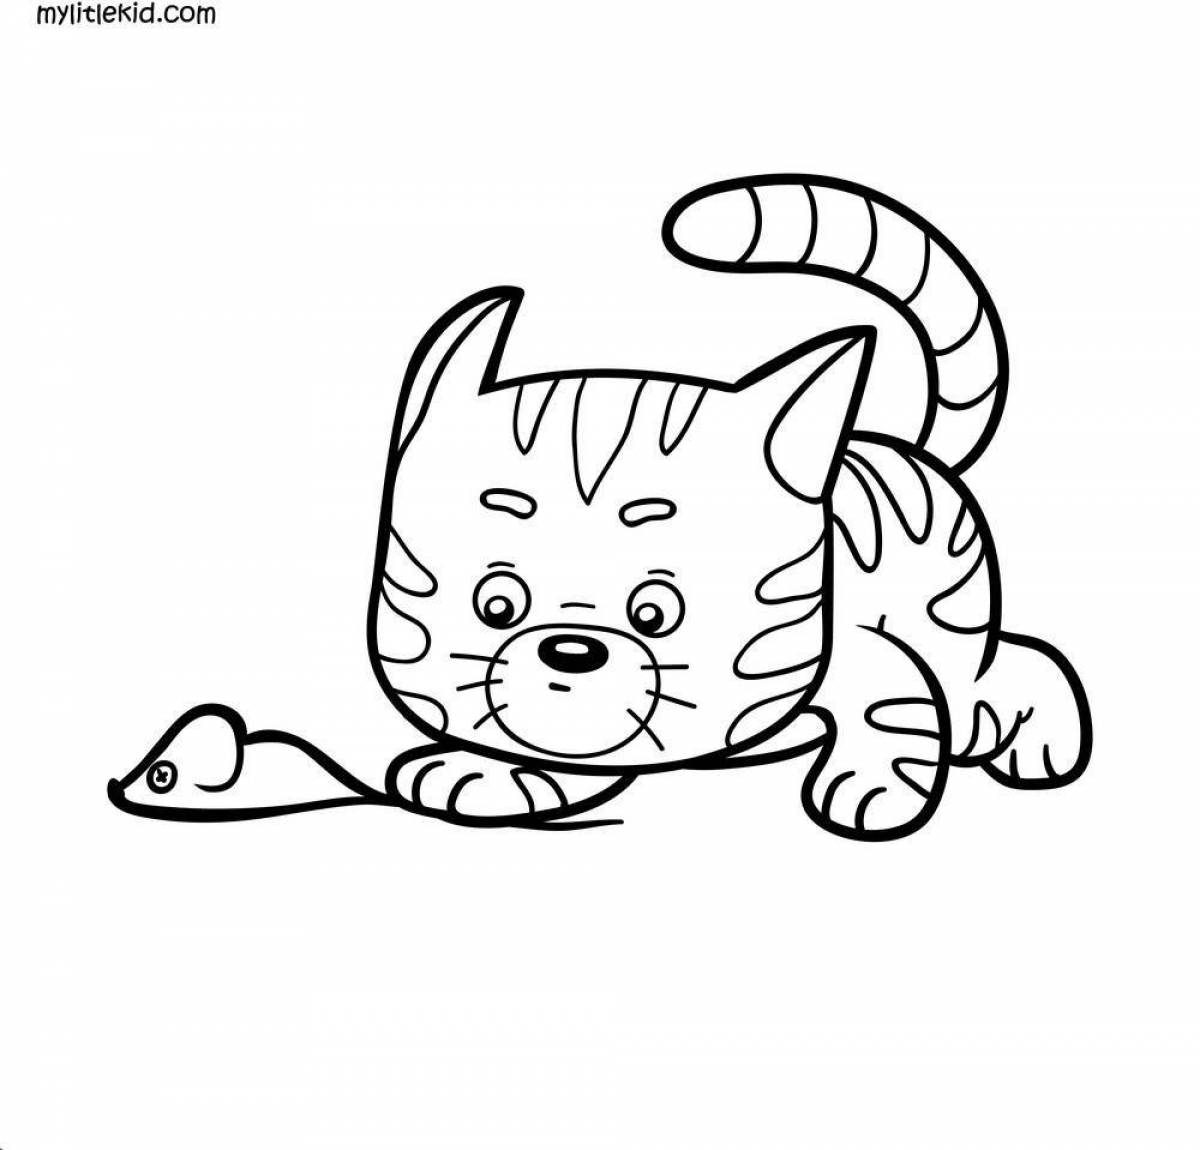 Cute kitten coloring for kids